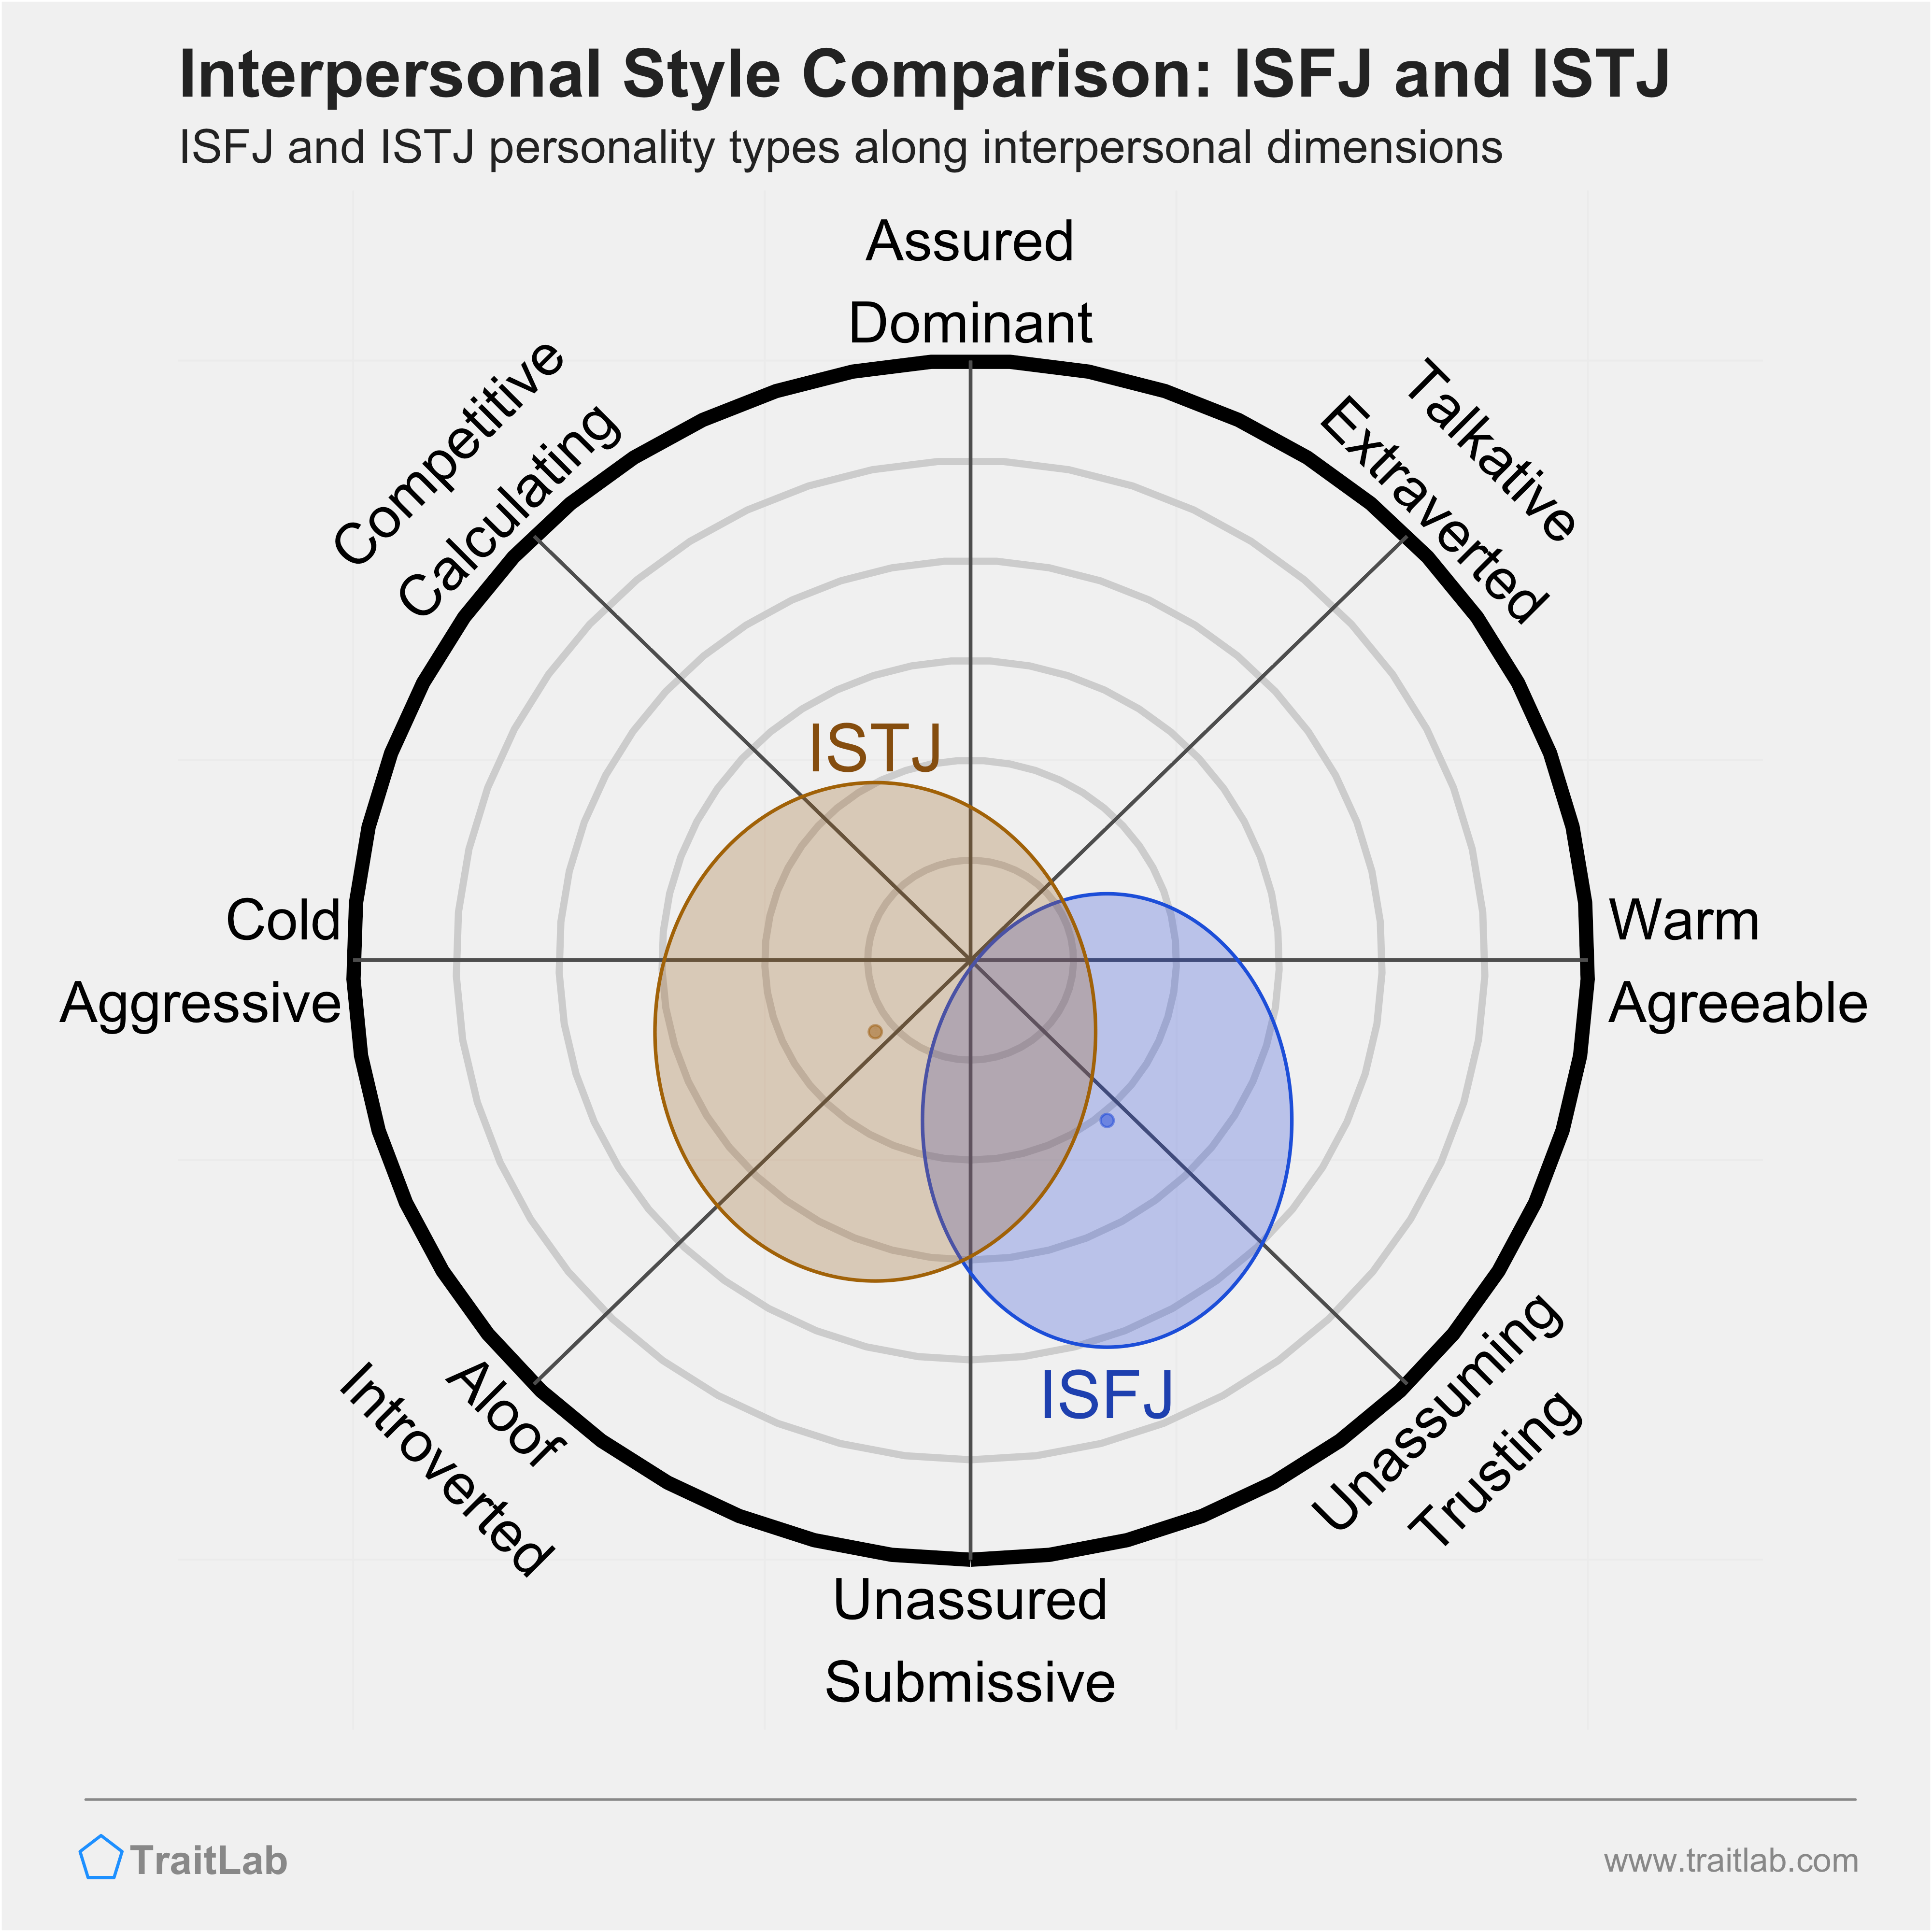 ISFJ and ISTJ comparison across interpersonal dimensions